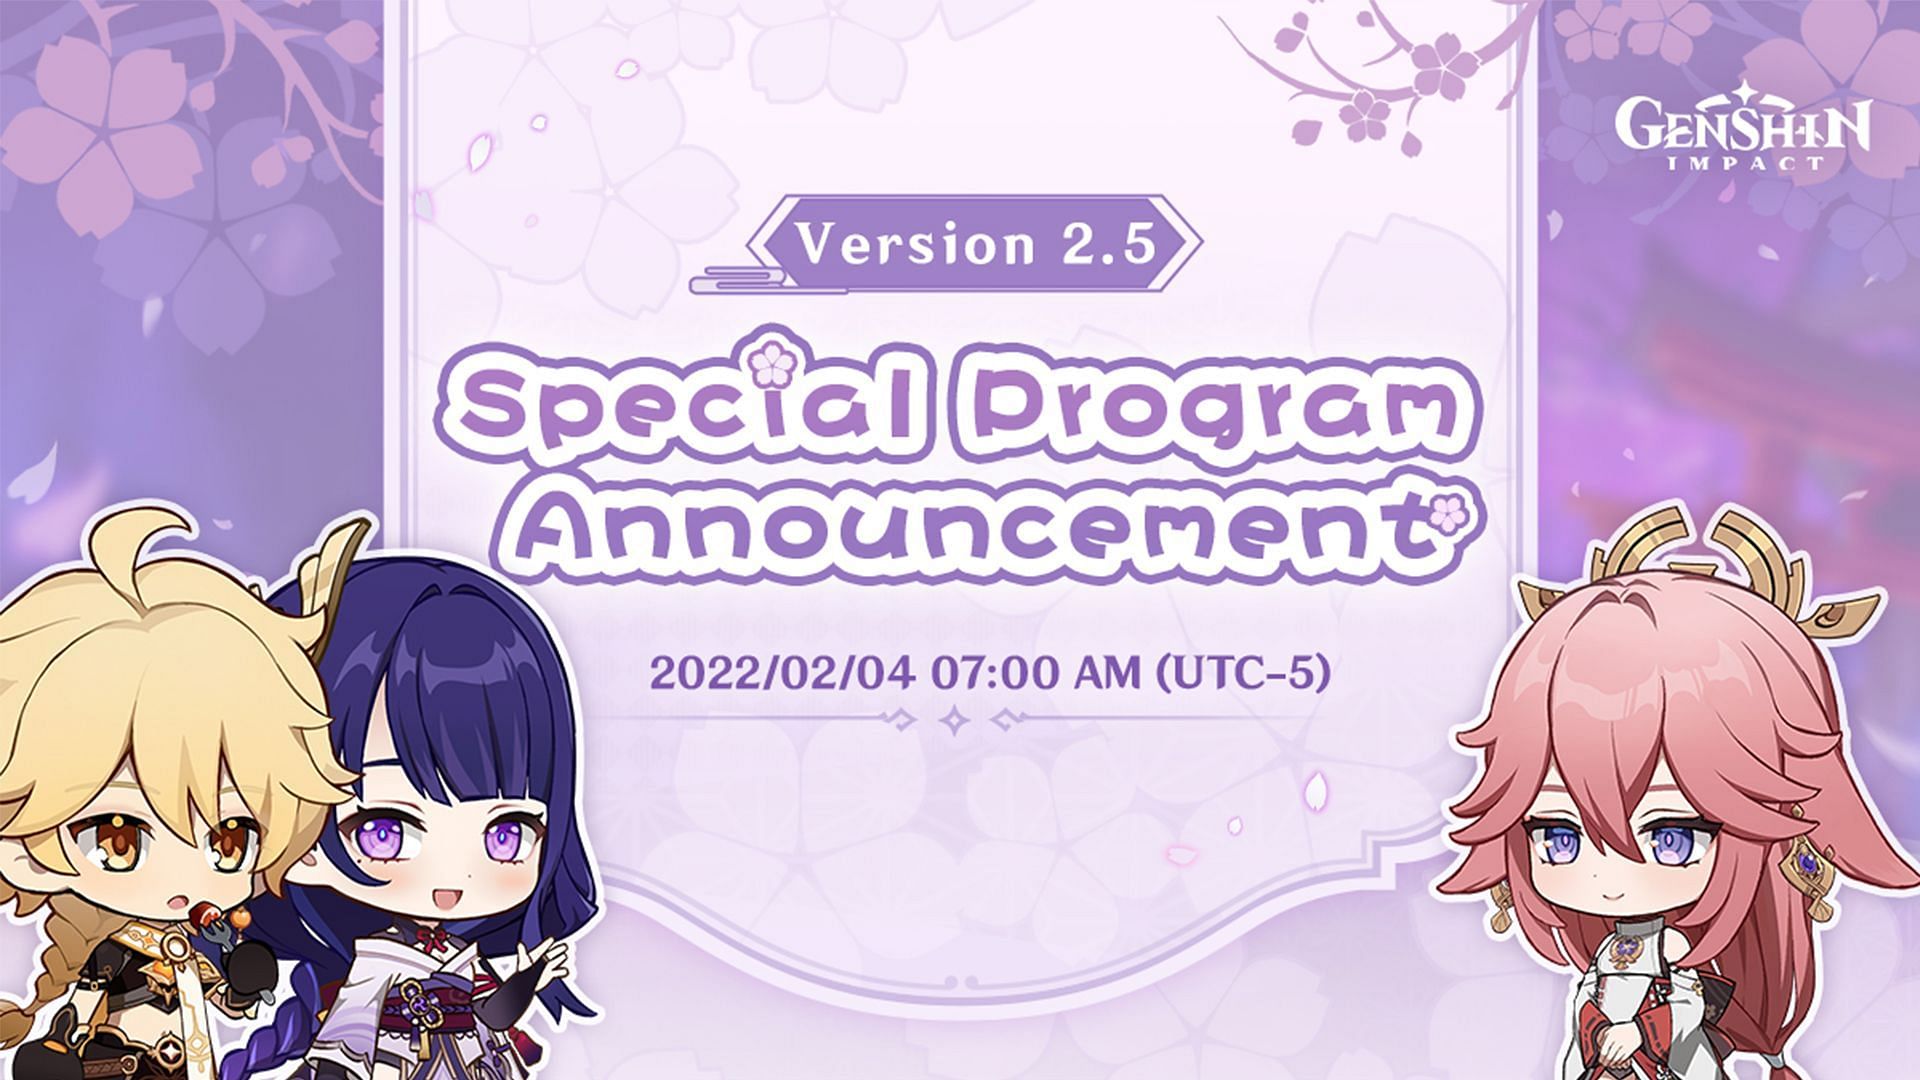 Version 2.5 Special Program Announcement (Image via Genshin Impact)